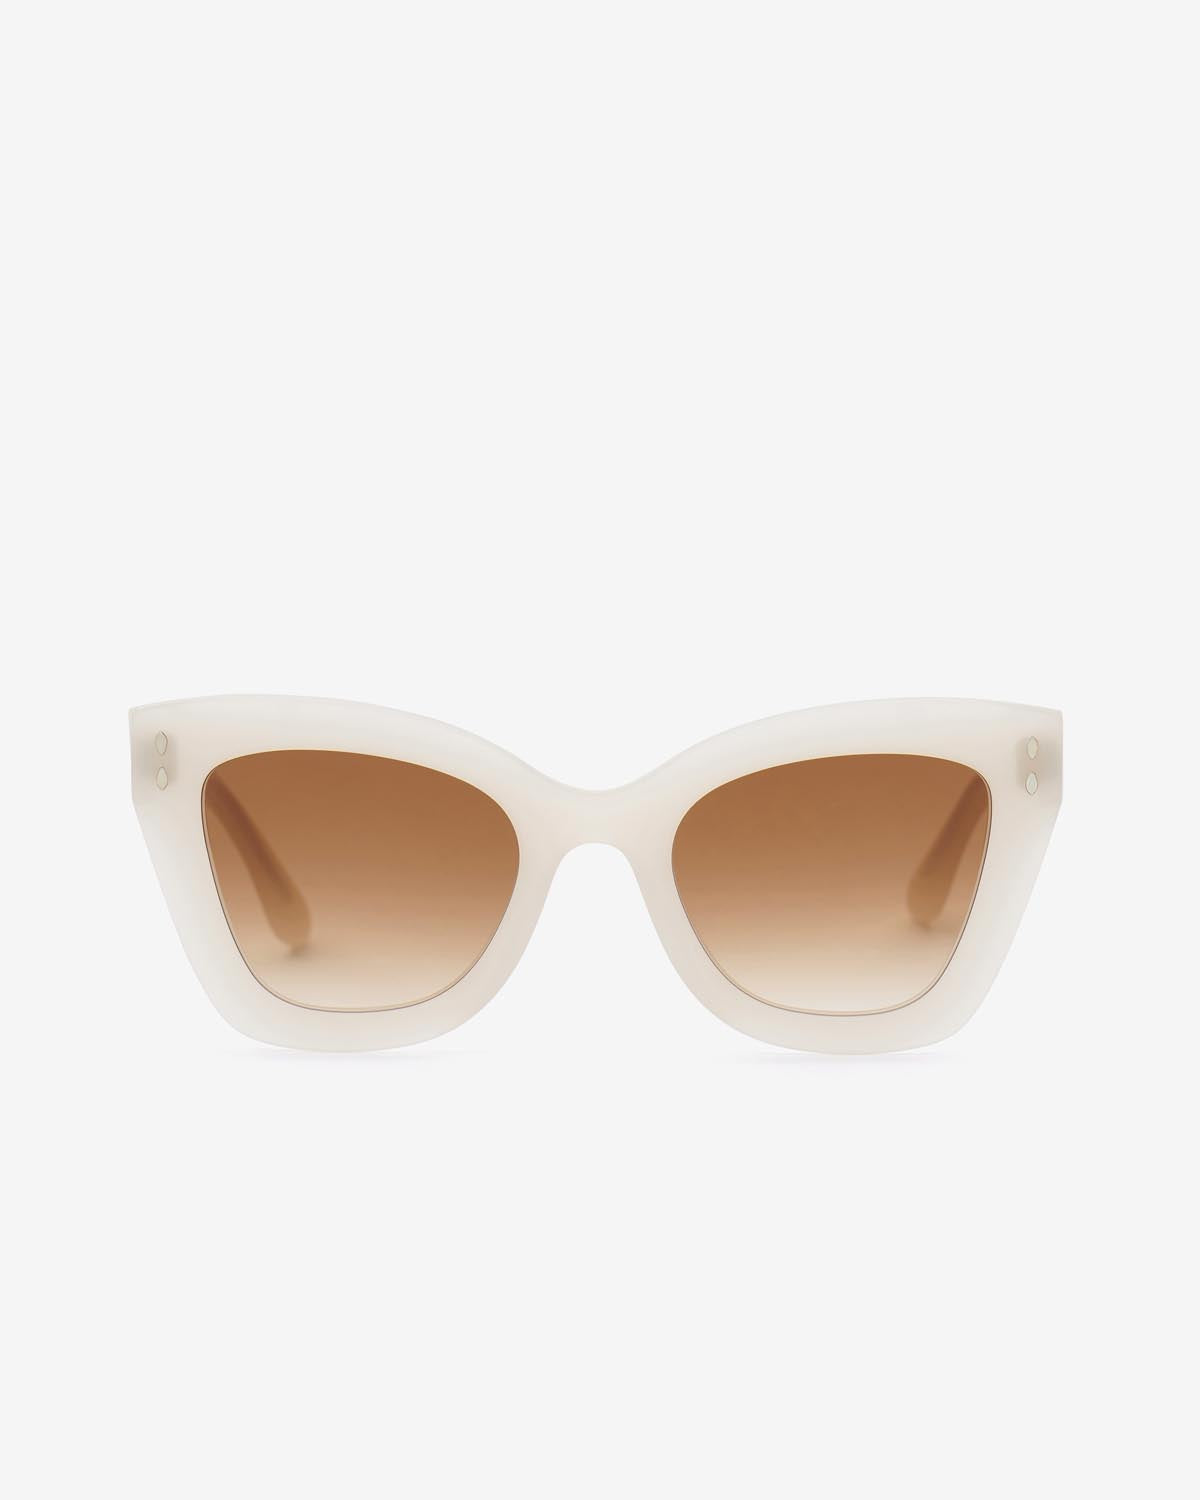 Louny sunglasses Woman Ivory-brown shaded 2